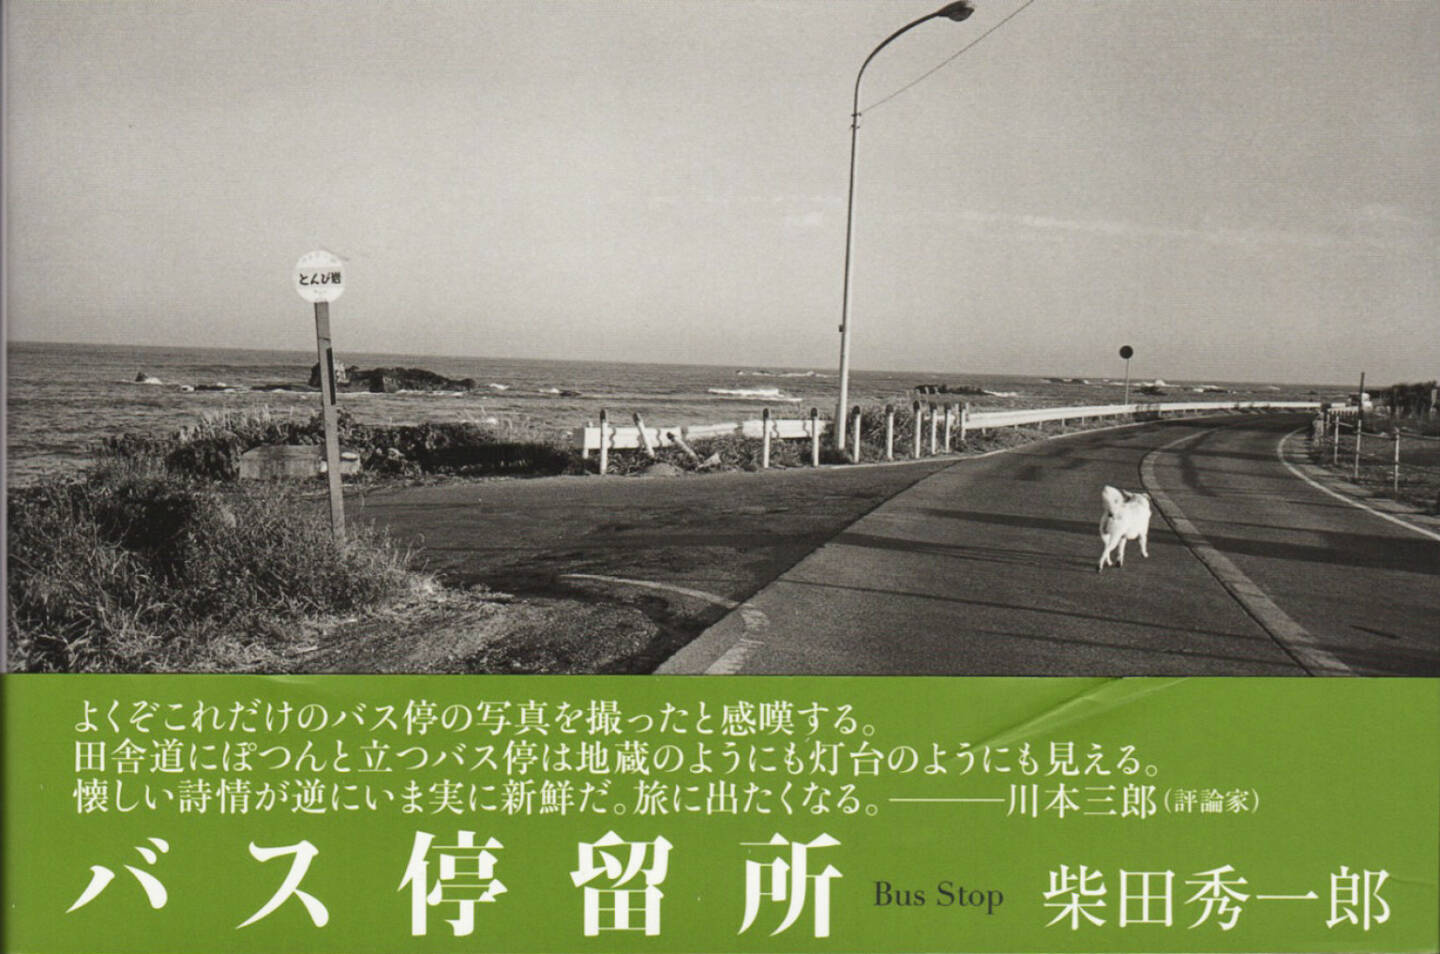 Shuichiro Shibata - Bus Stop バス停留所, Little More 2010, Cover - http://josefchladek.com/book/shuichiro_shibata_-_bus_stop_バス停留所